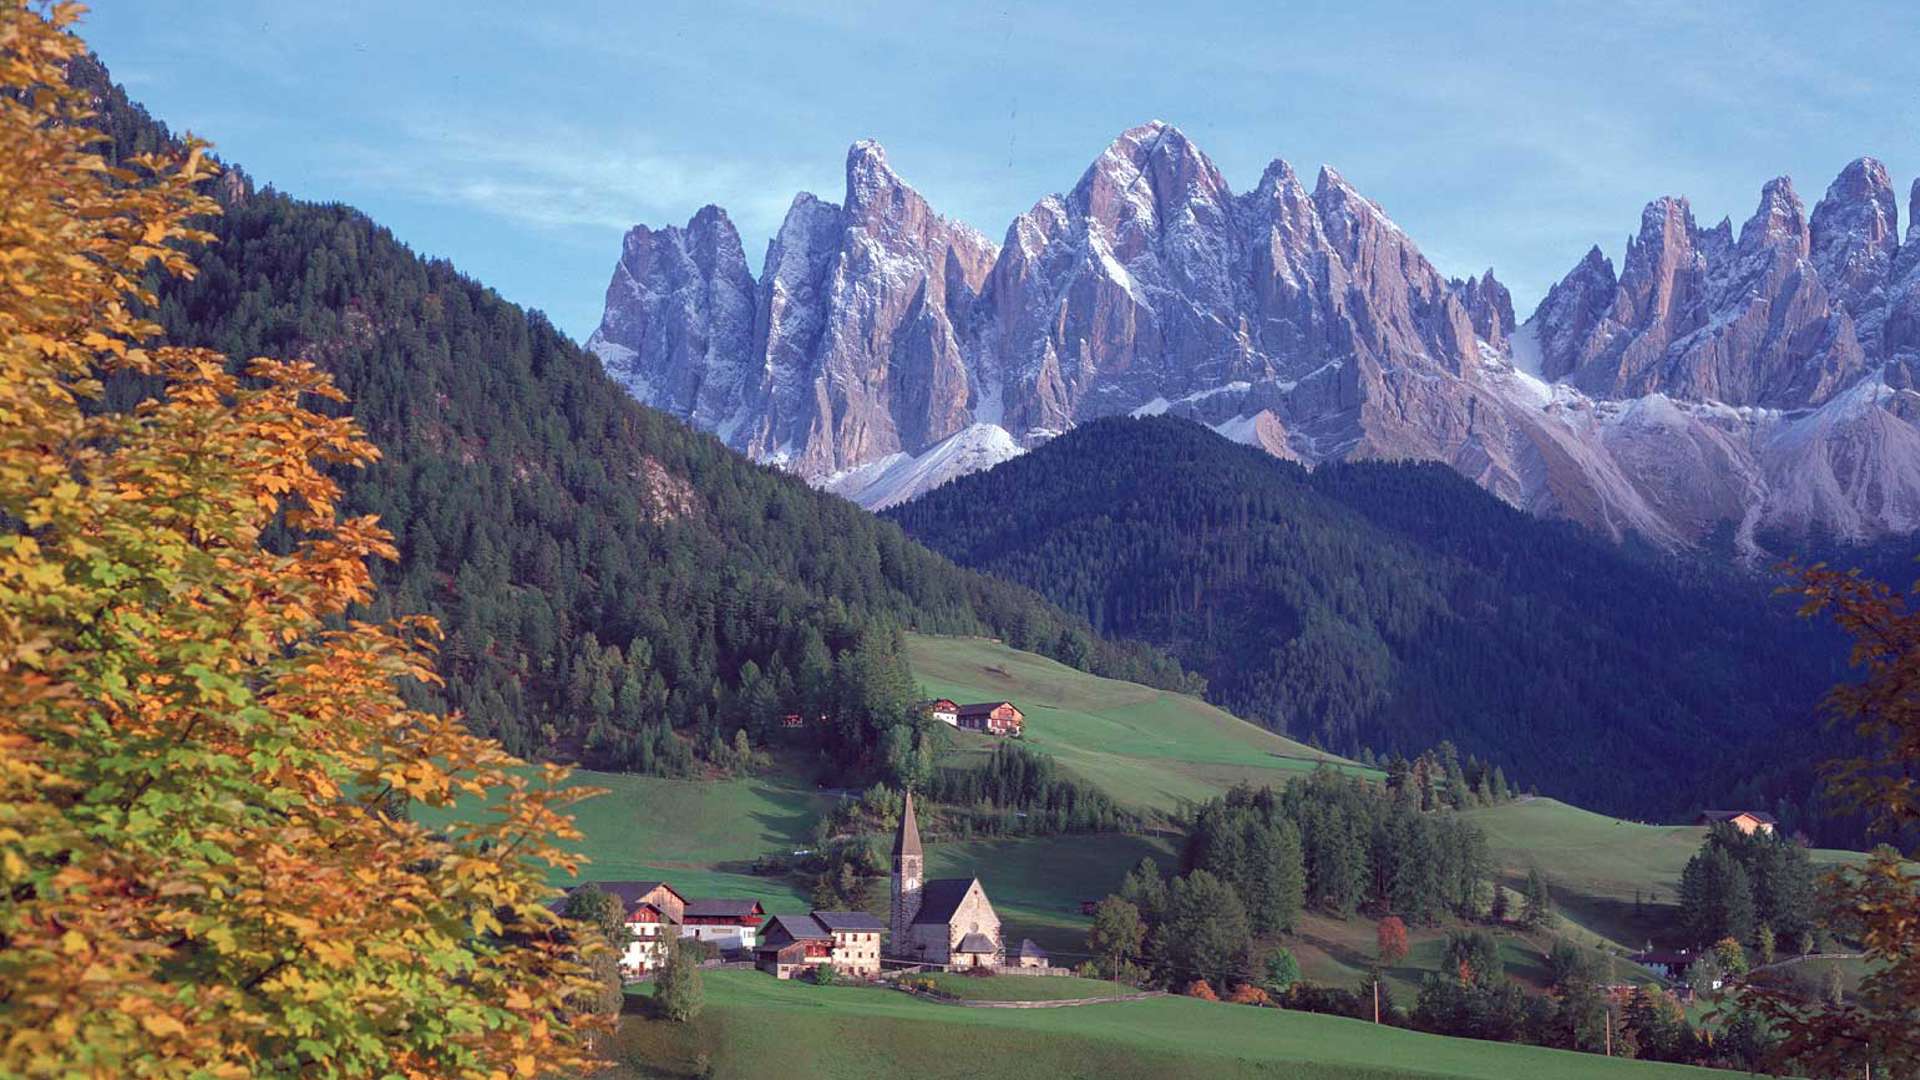 Dolomites, Italy